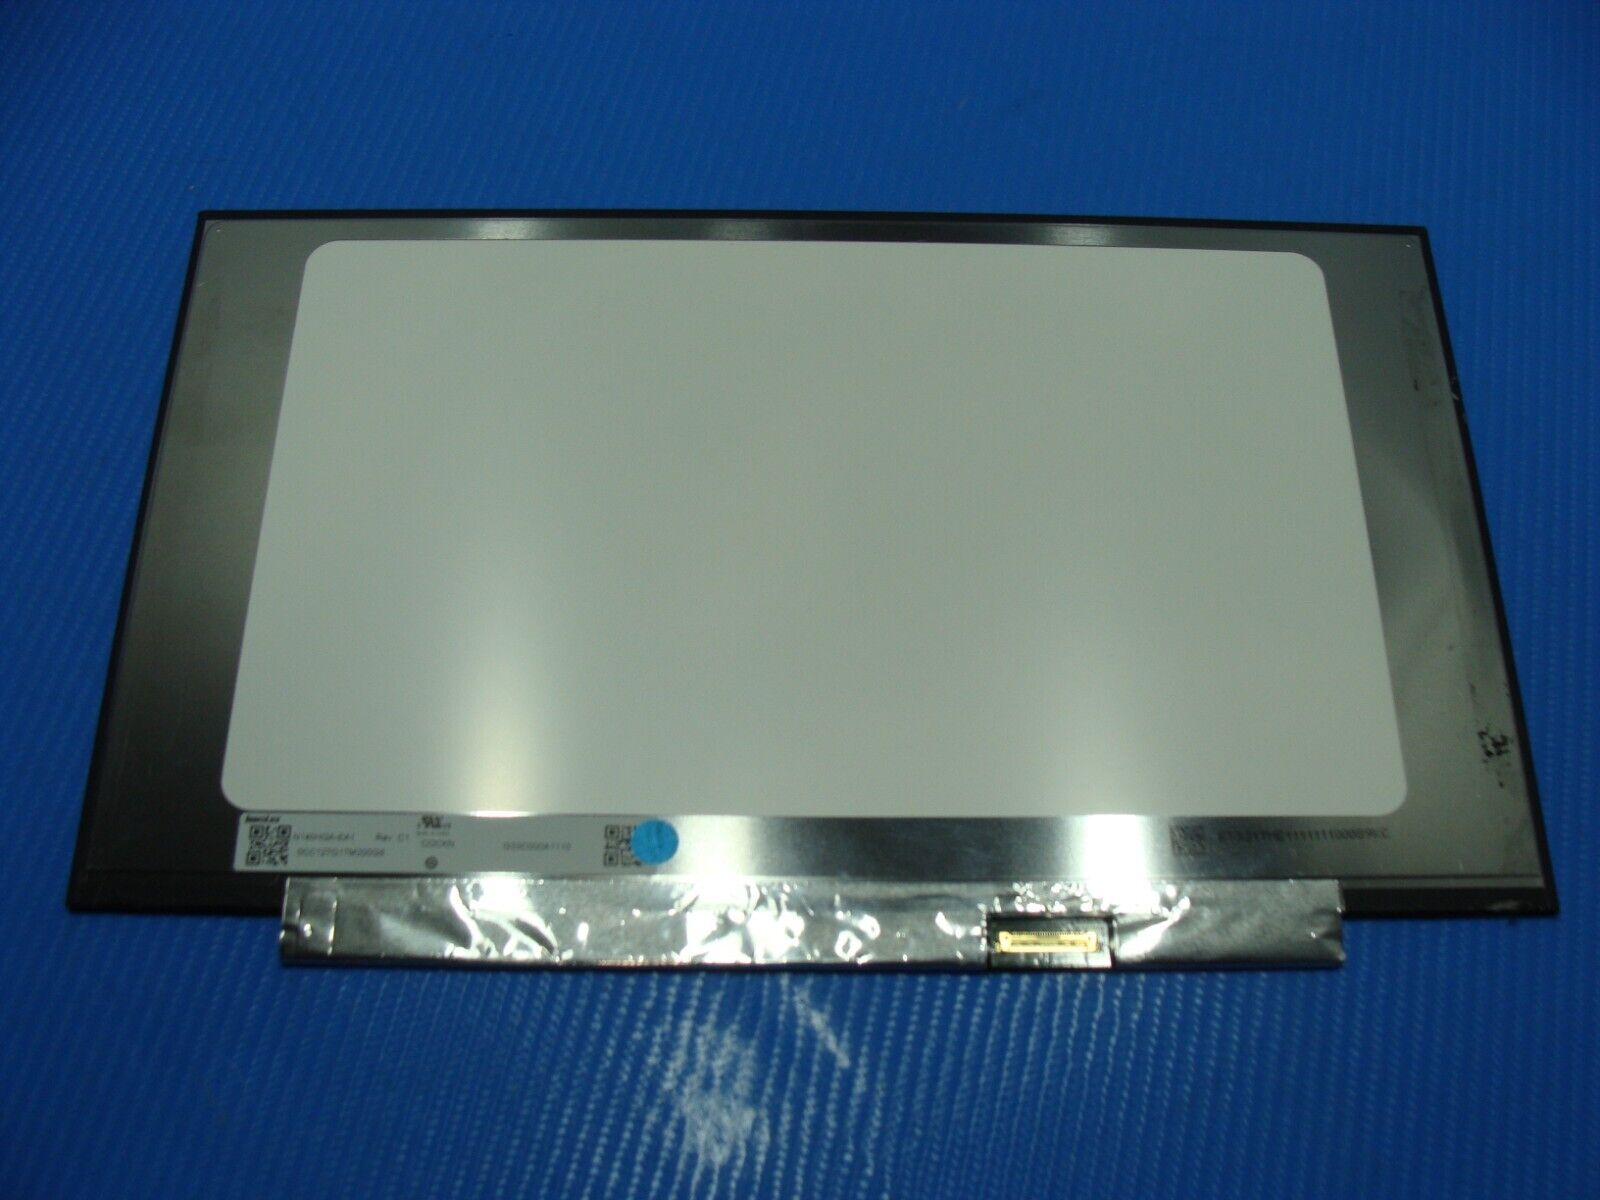 Toshiba Dynabook Tecra 14” A40-G Matte FHD InnoLux LCD Screen N140HGA-EA1 Rev.C1